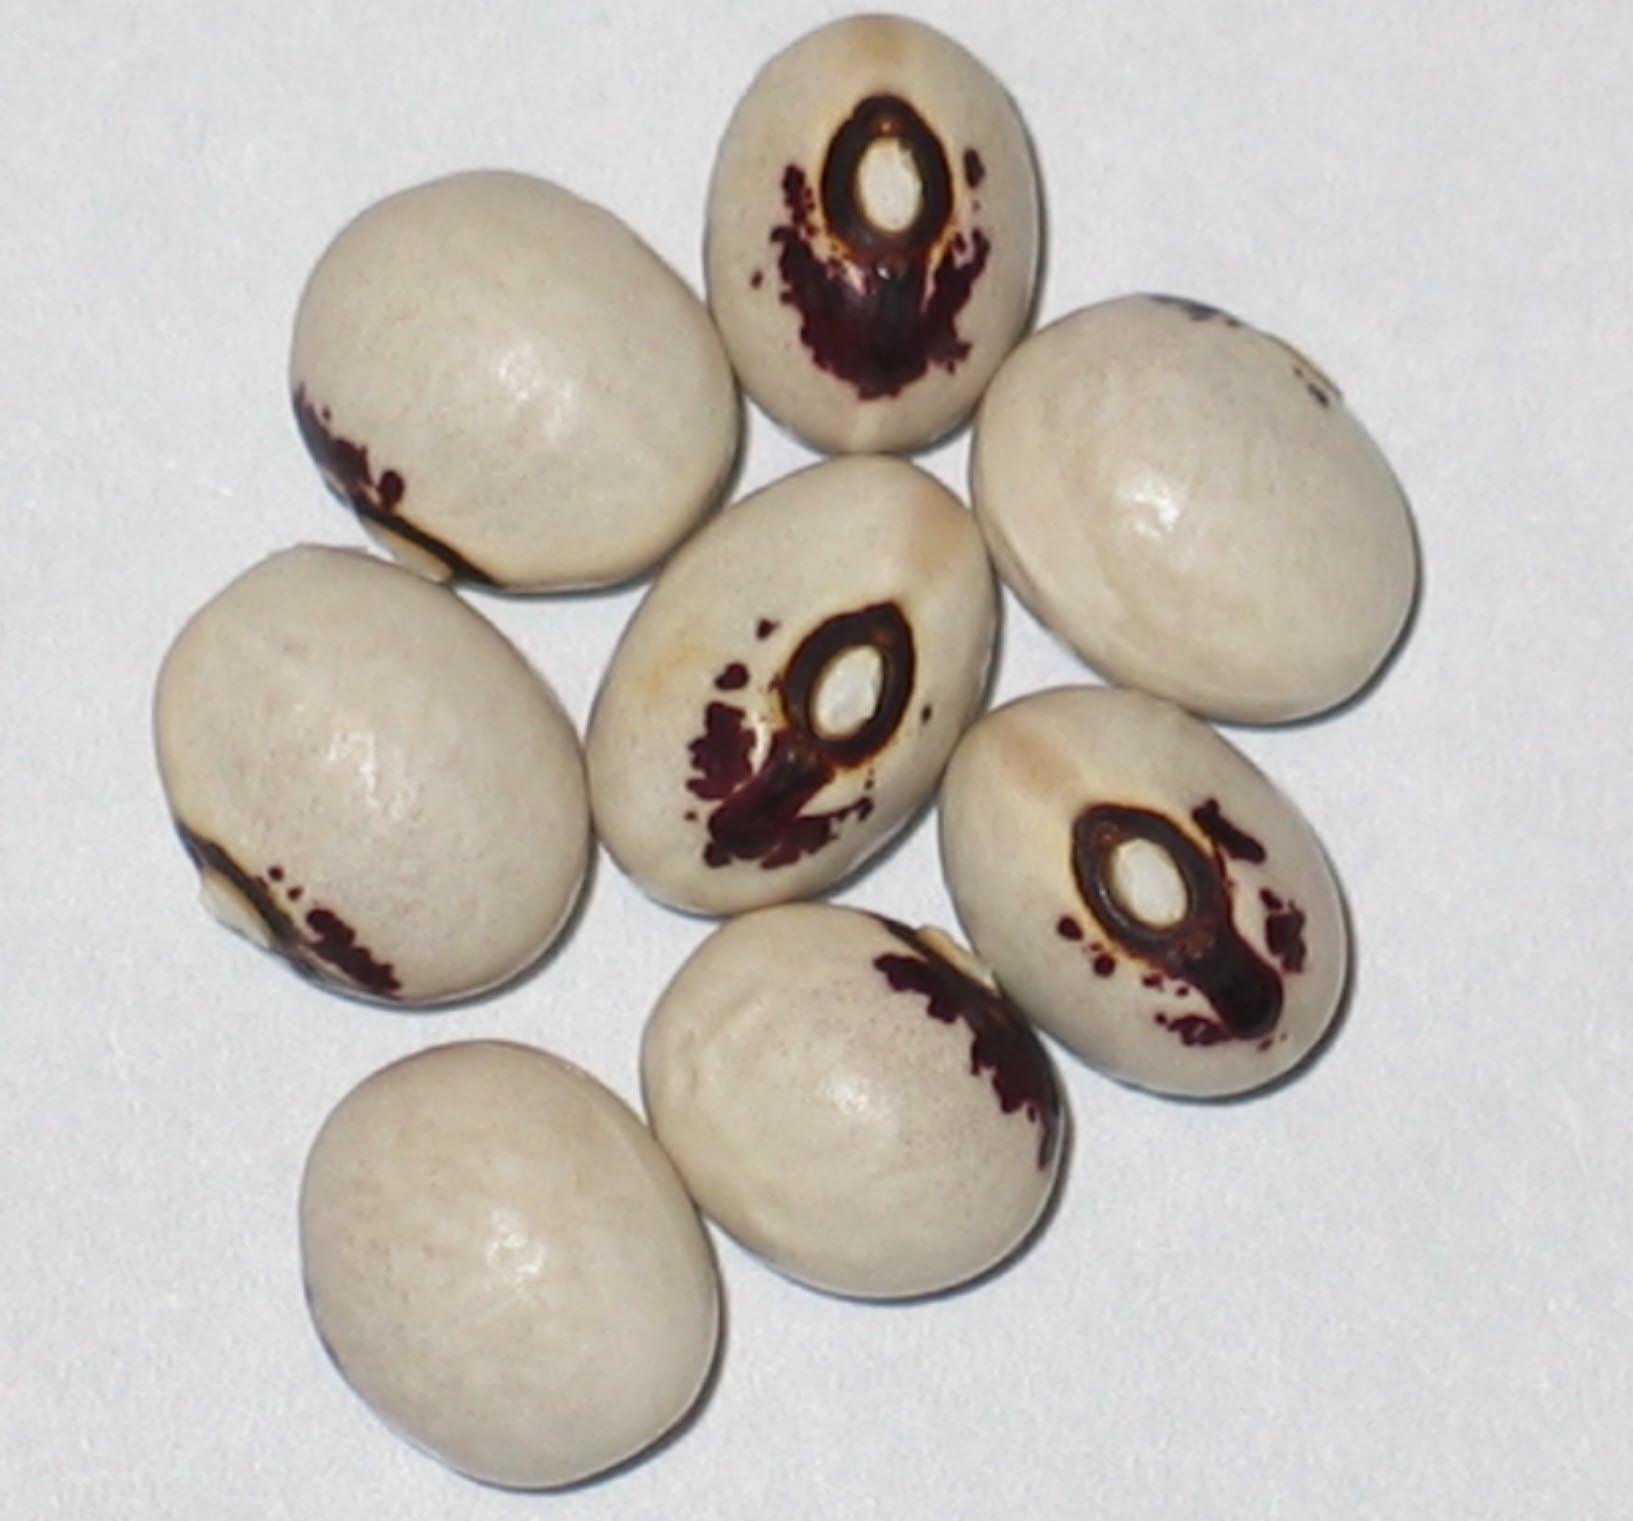 image of Leslie Tenderpod beans